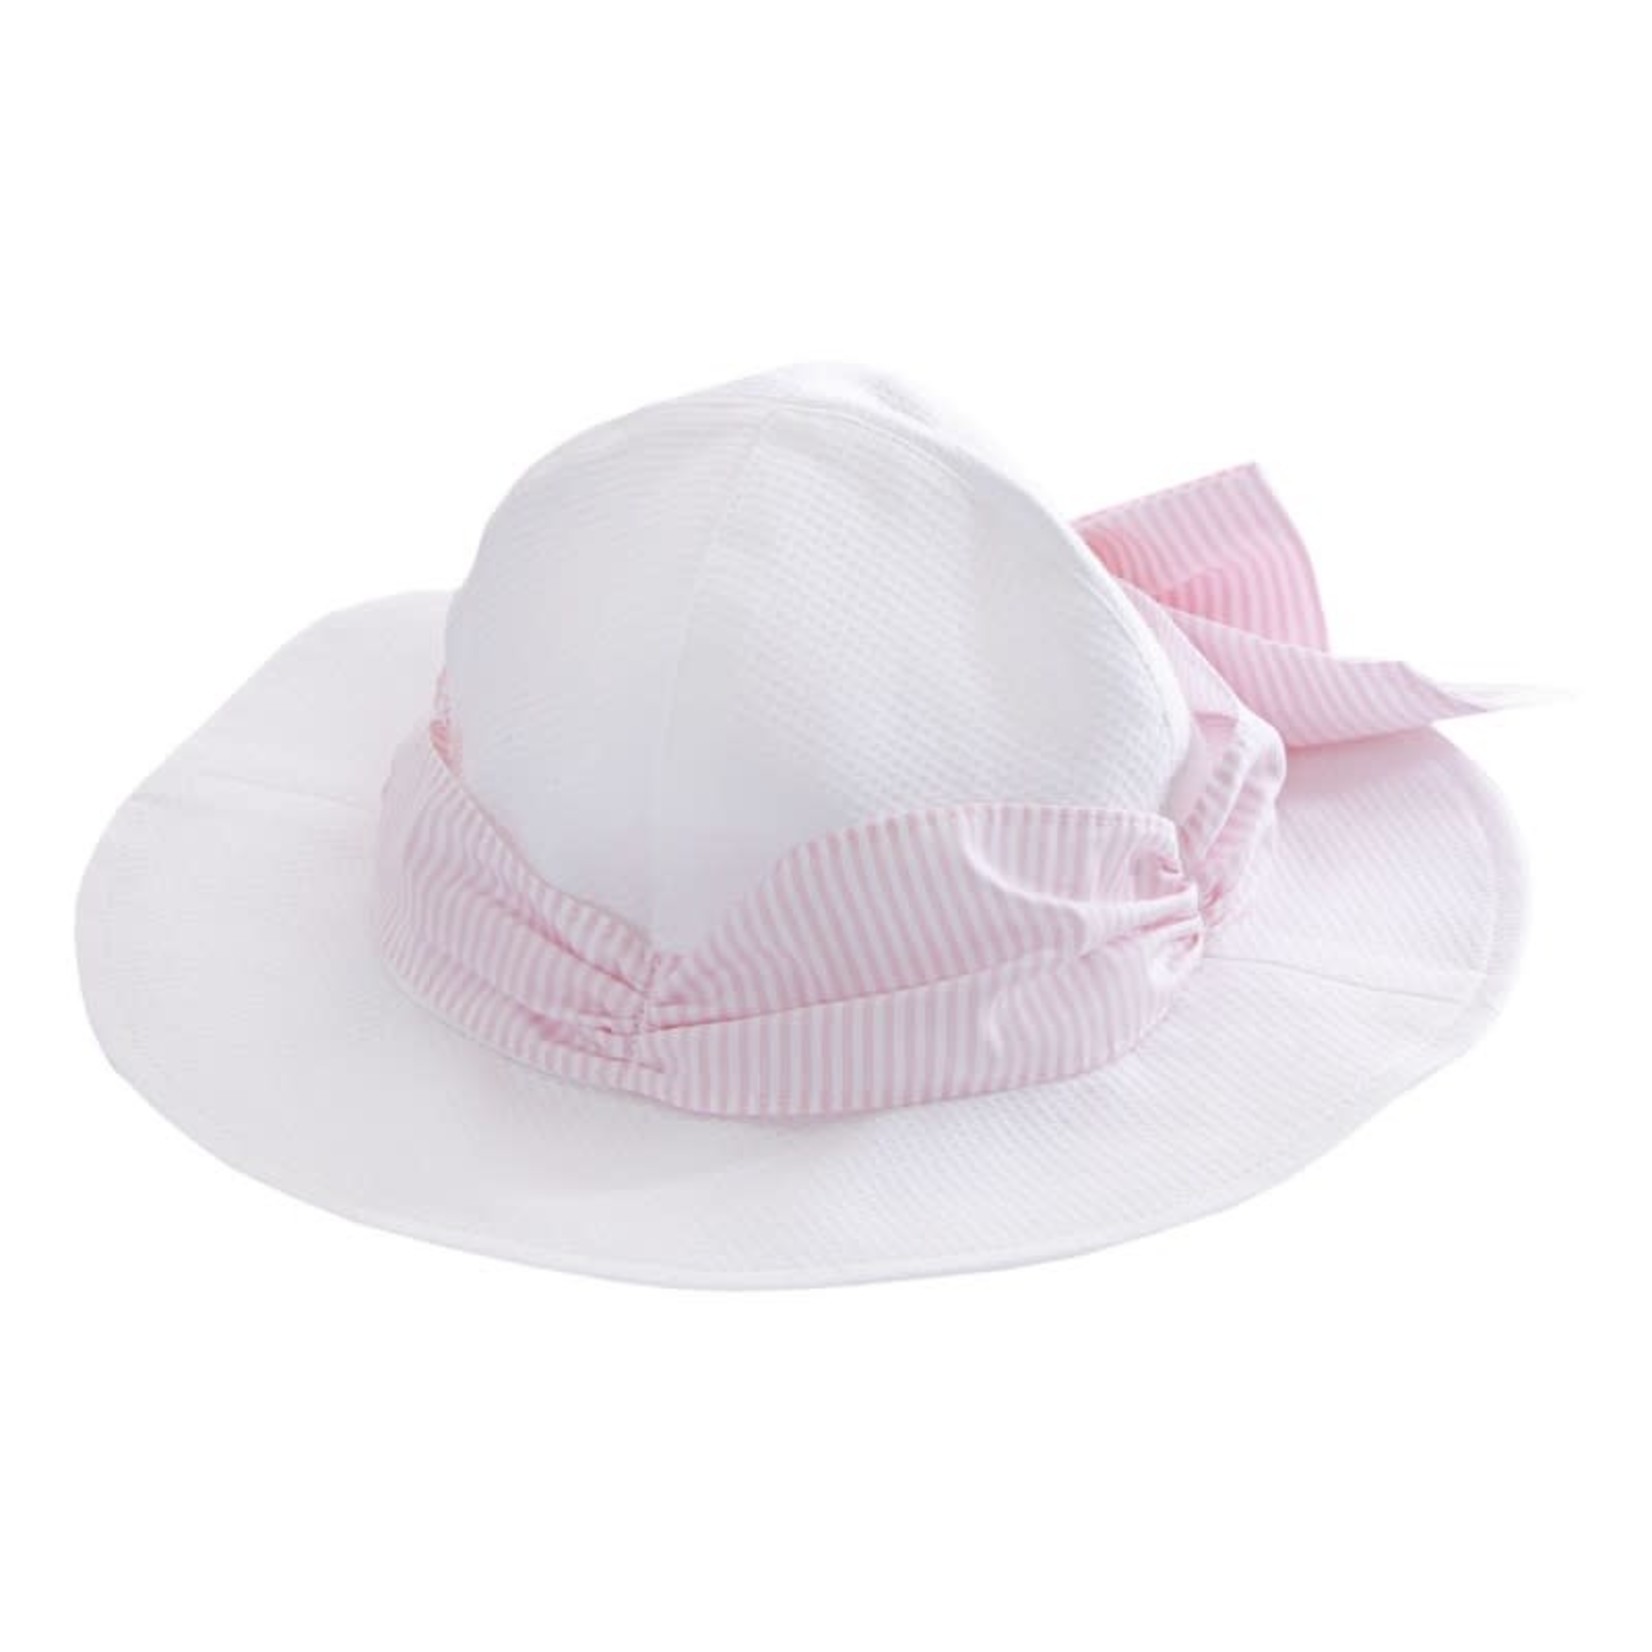 Patachou Patachou White Hat